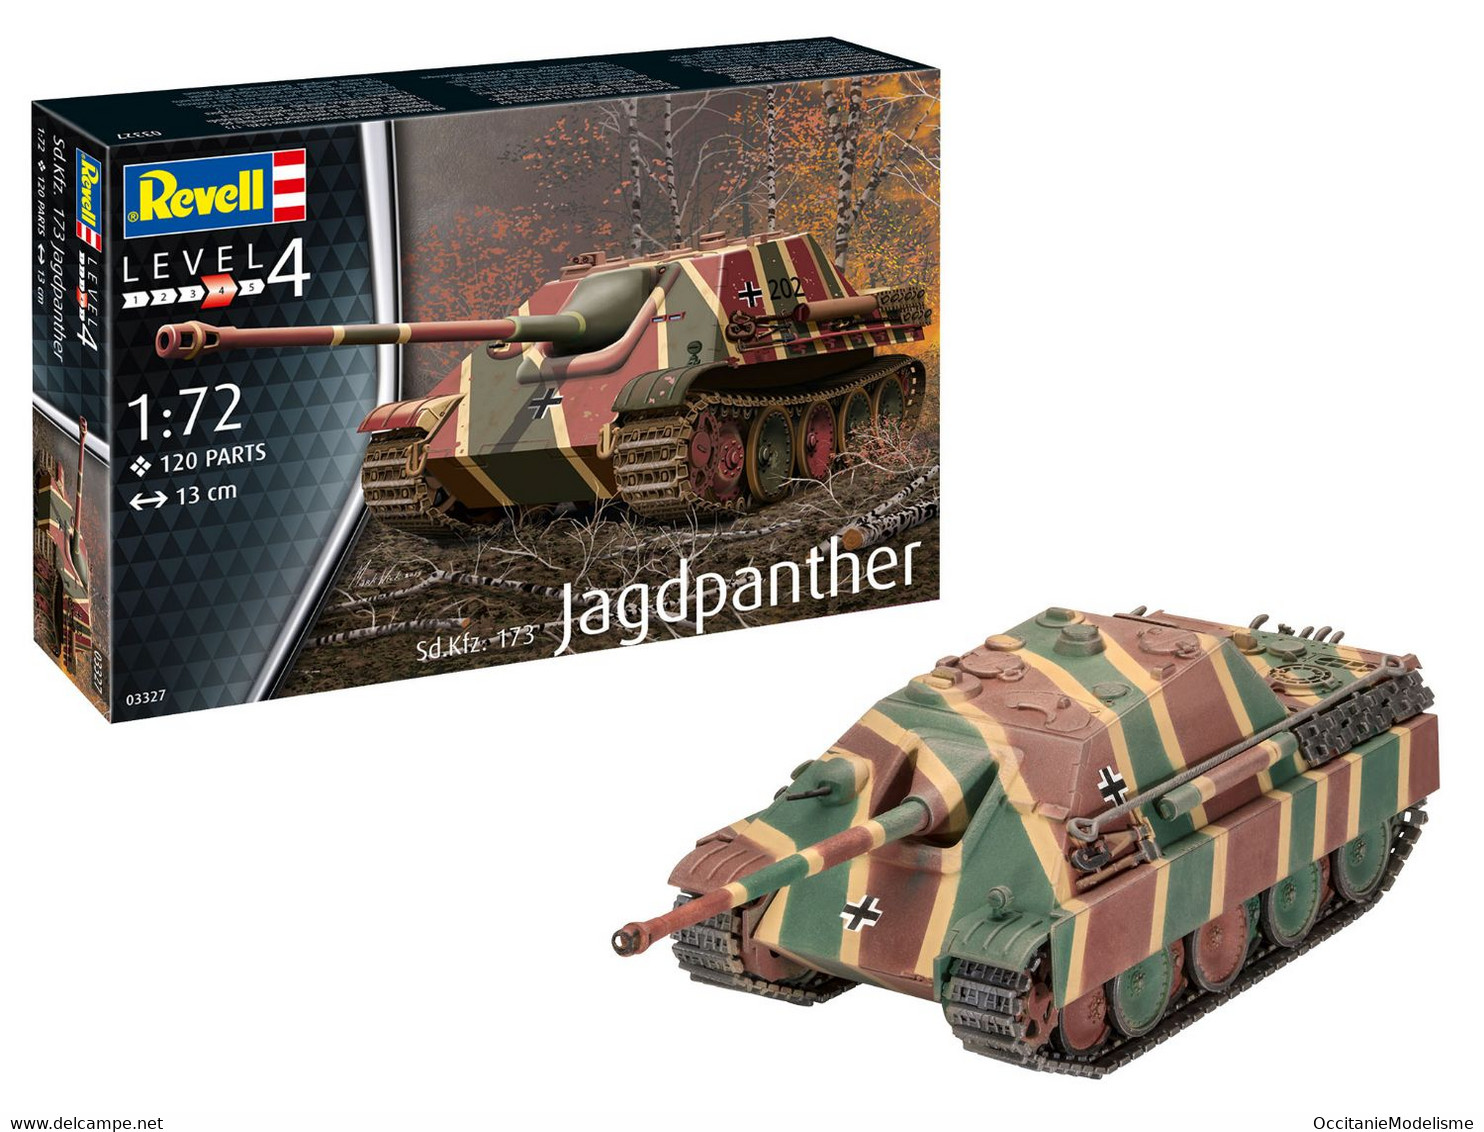 Revell - CHAR Jagdpanther Sd.Kfz.173 Maquette Militaire Kit Plastique Réf. 03327 Neuf NBO 1/72 - Véhicules Militaires